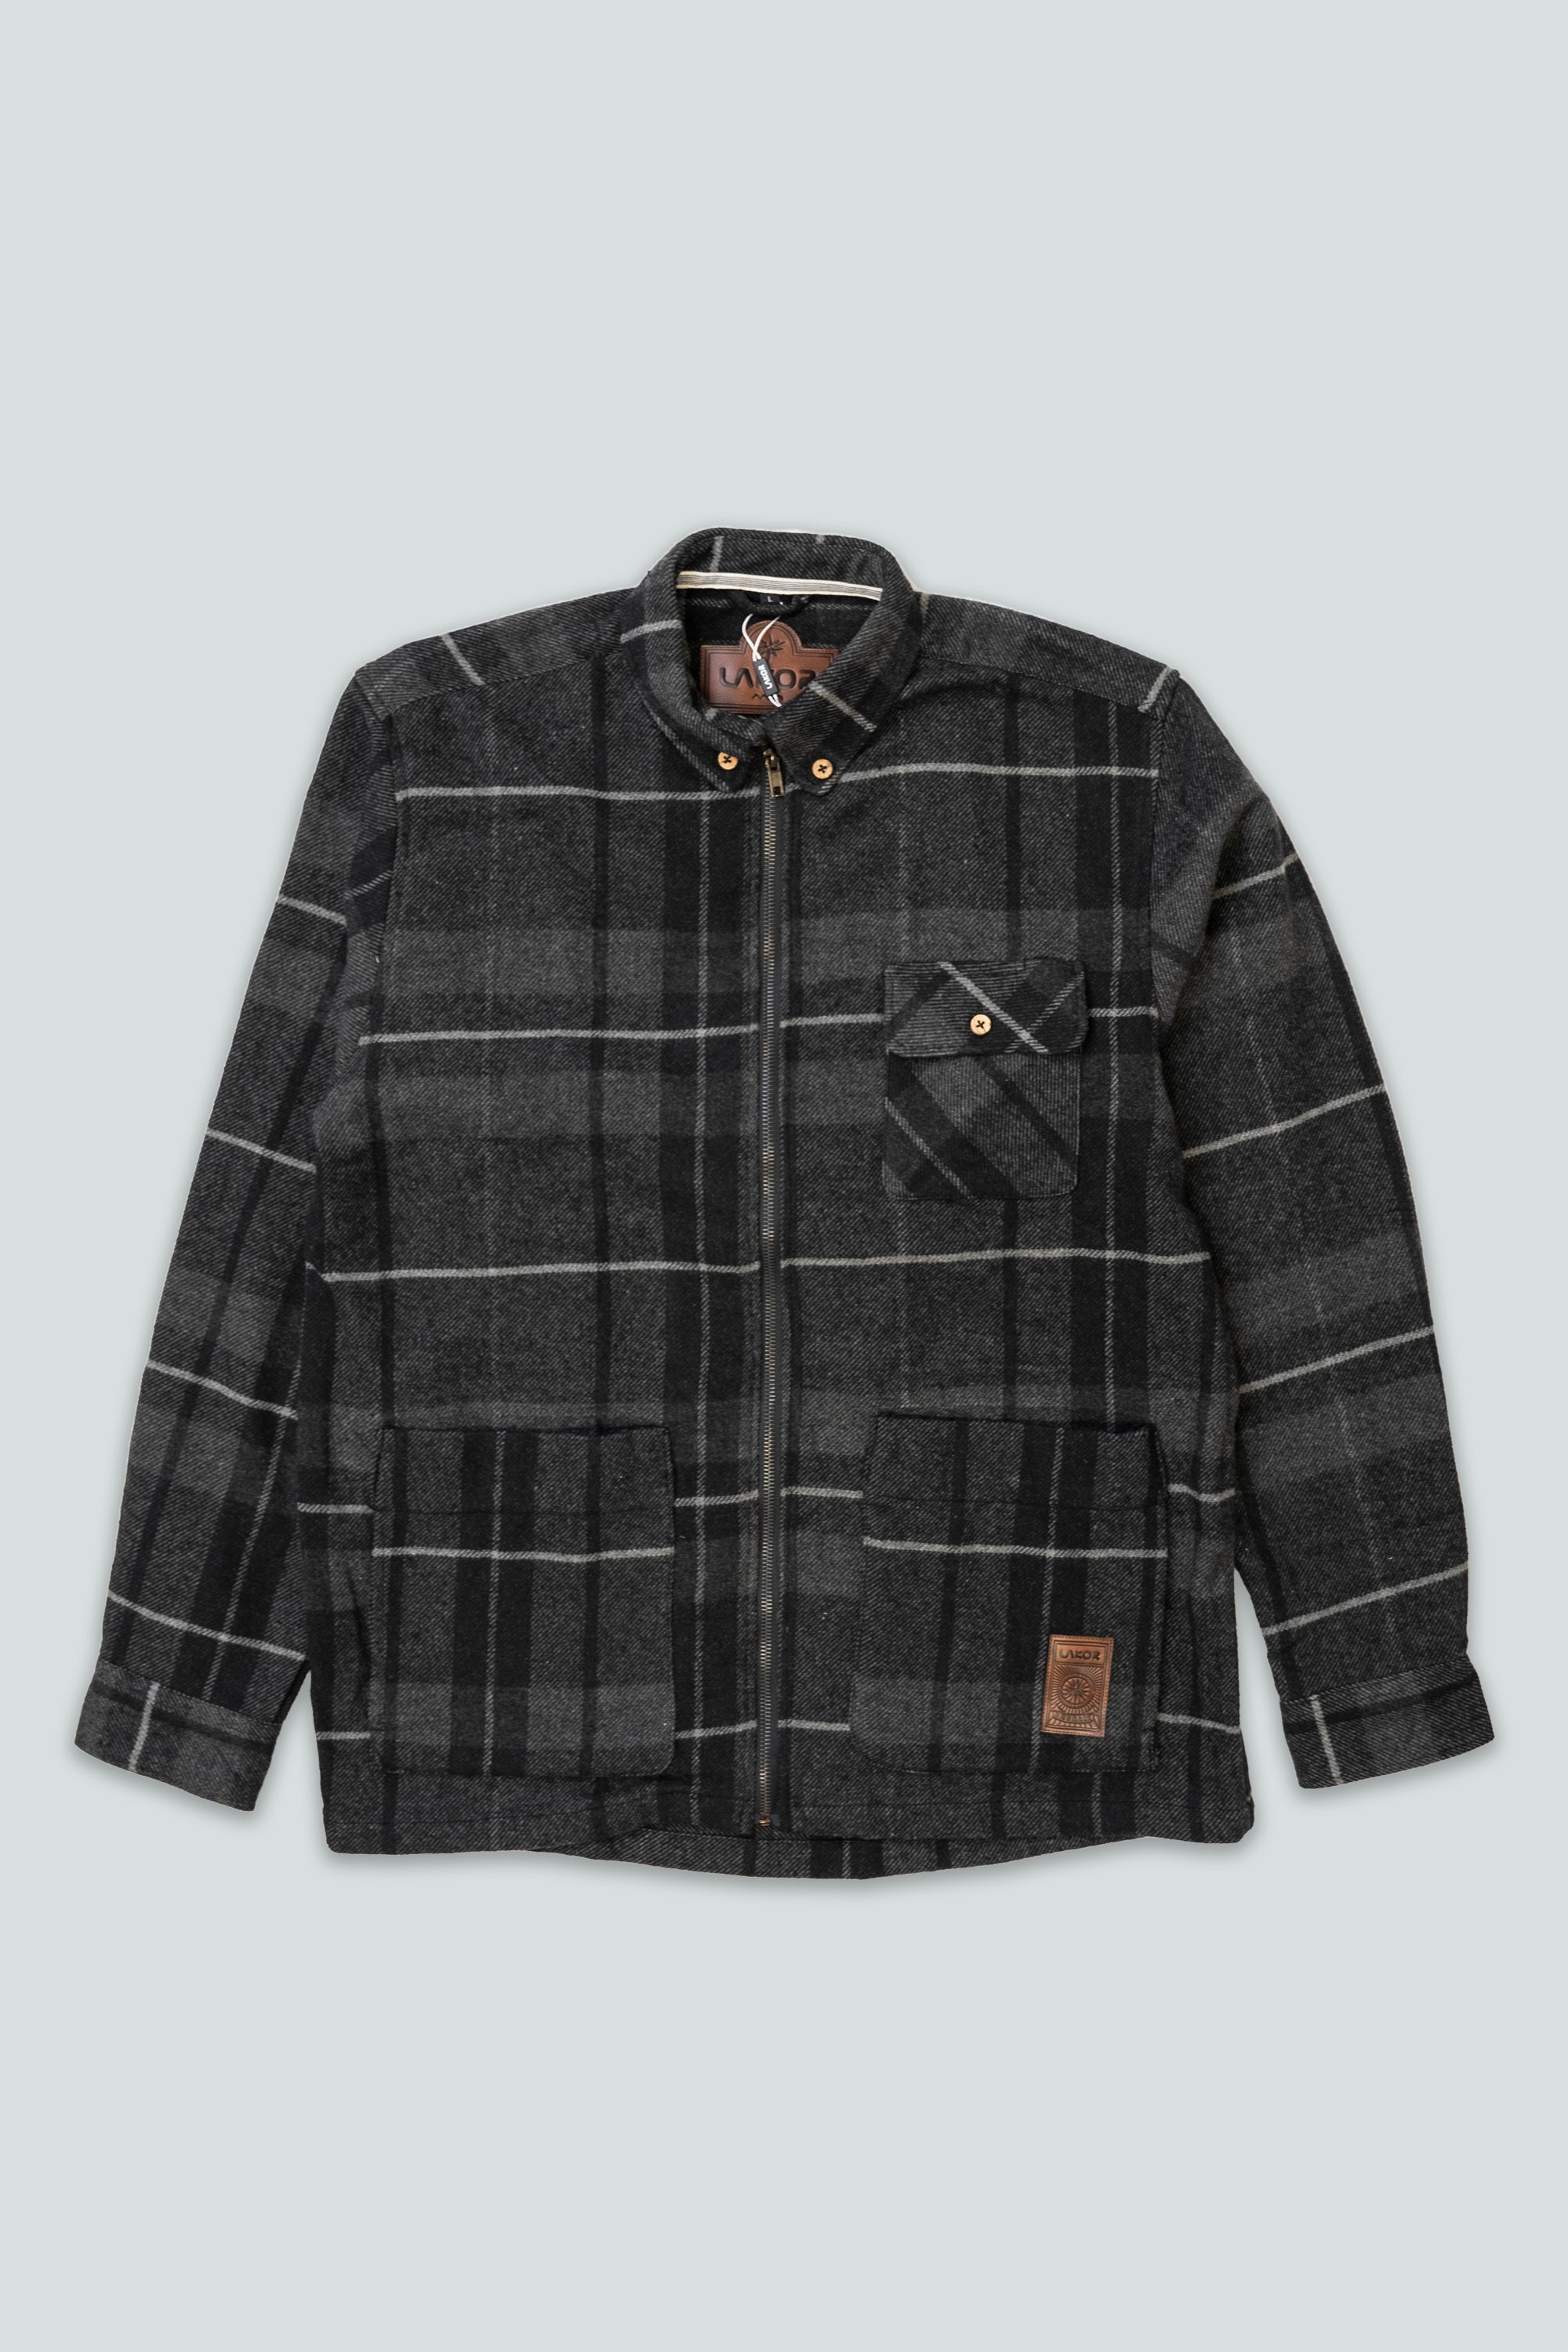 Beaver Shirt Jacket (Grey/Black)